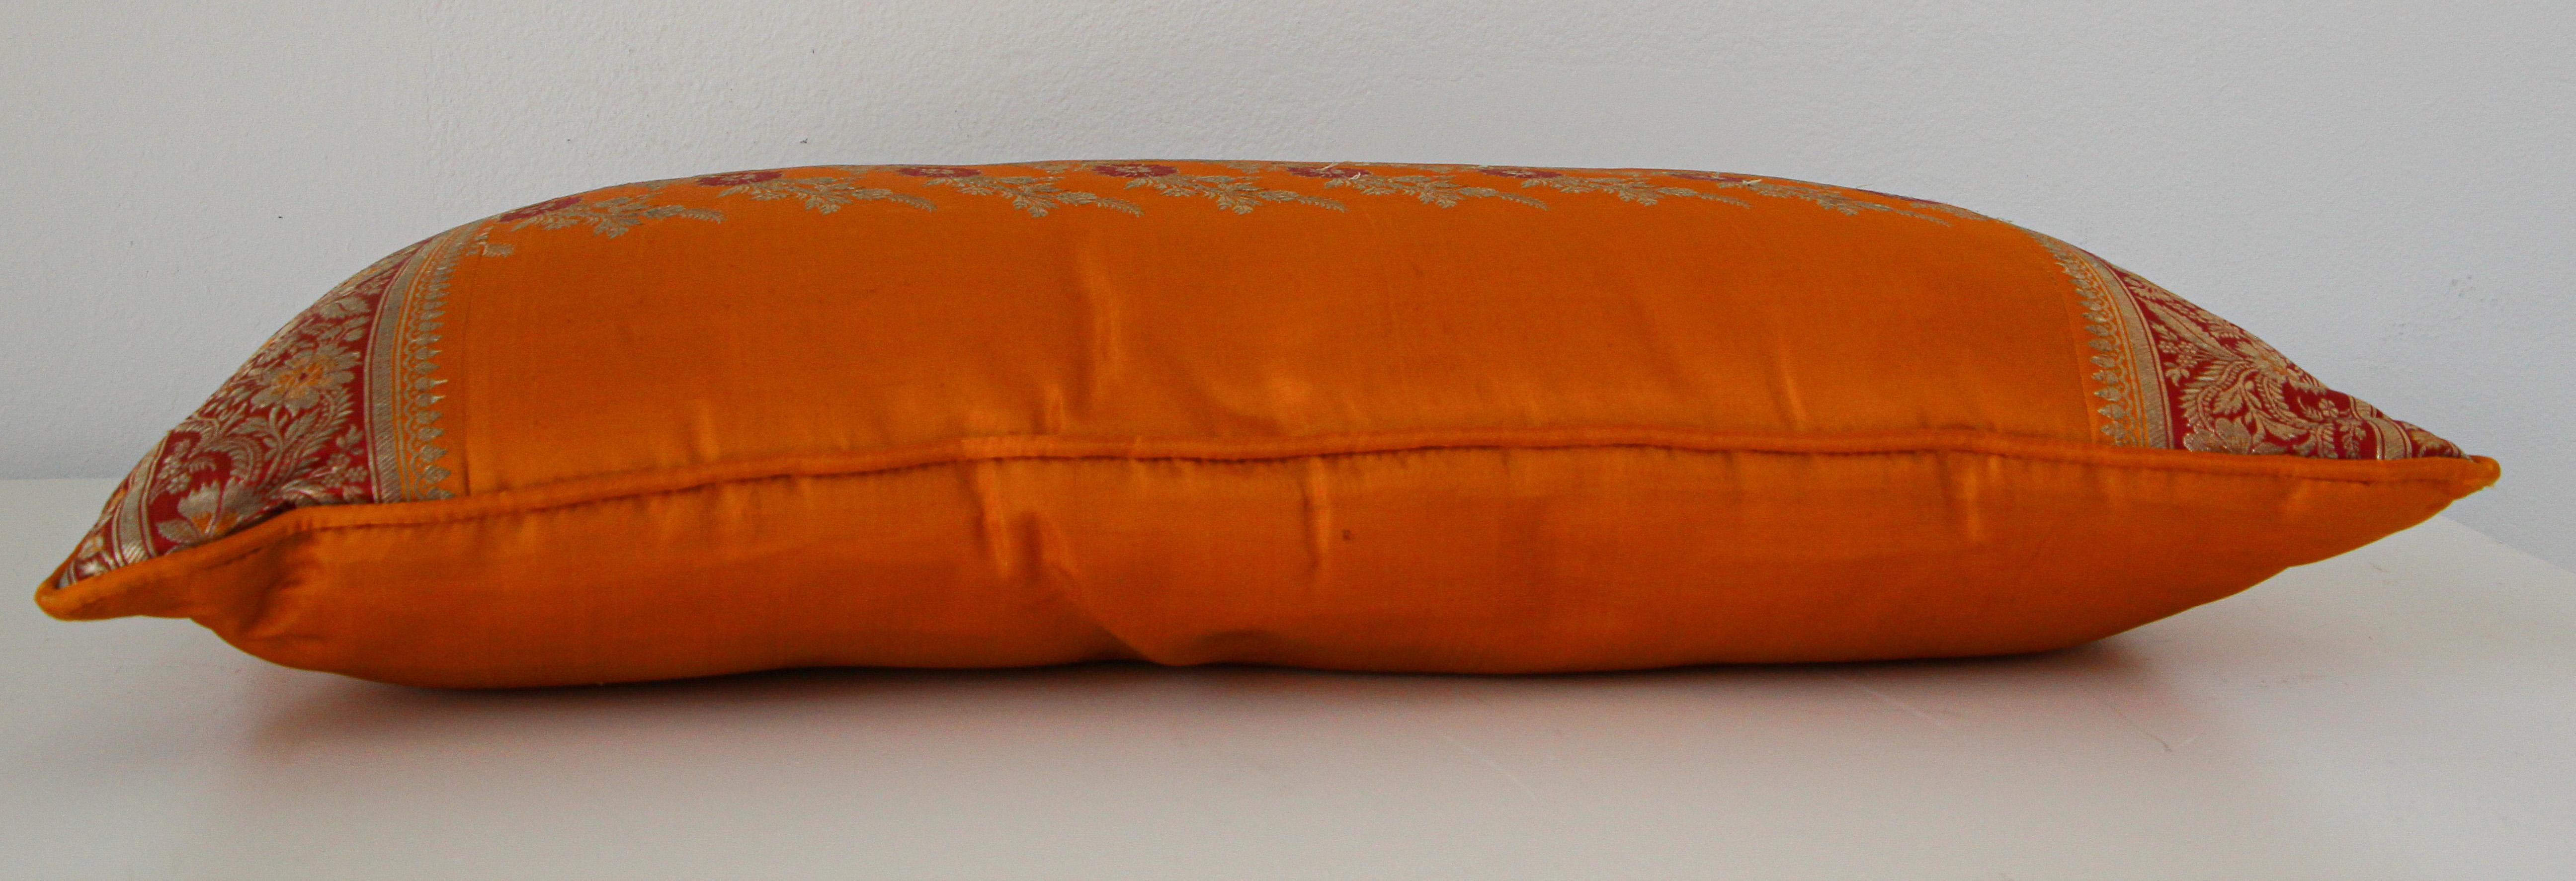 Silk Pillow Custom Made from a Wedding Orange Sari, India For Sale 2